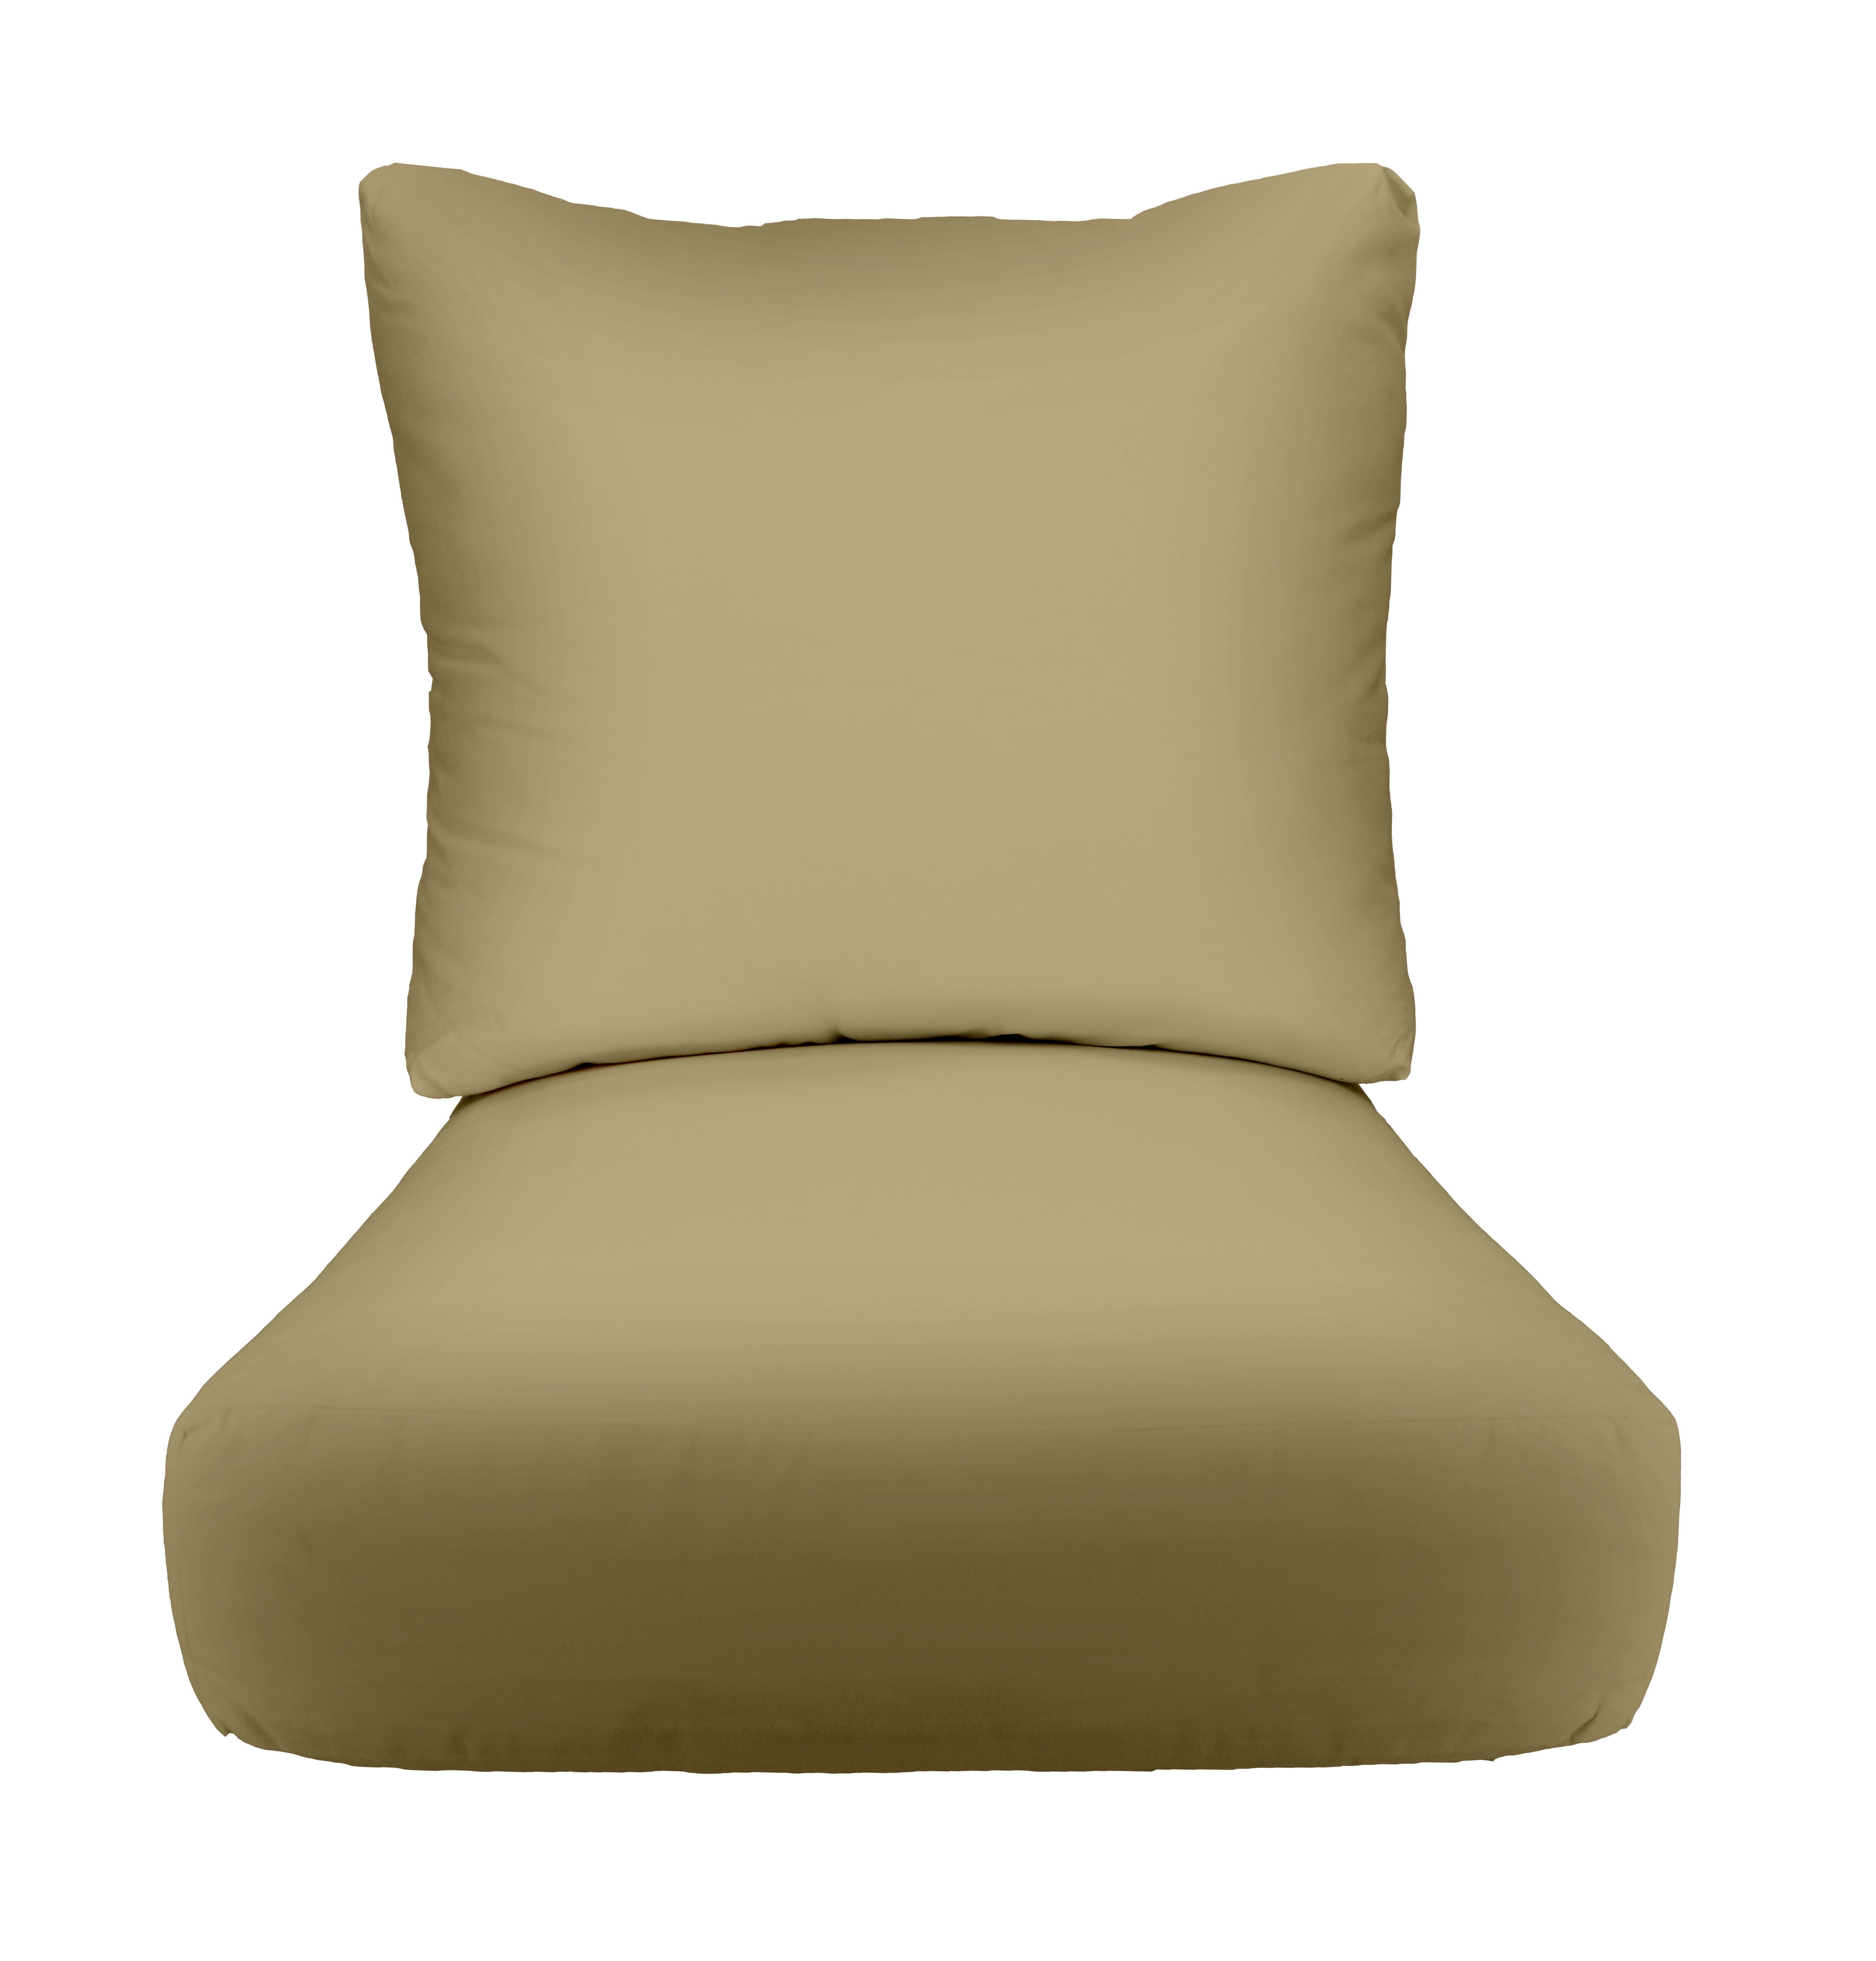 24"x 24"x 5" Indoor/ Outdoor Deep Seat Back Rest Cushion Love Sofa Pillow S1 